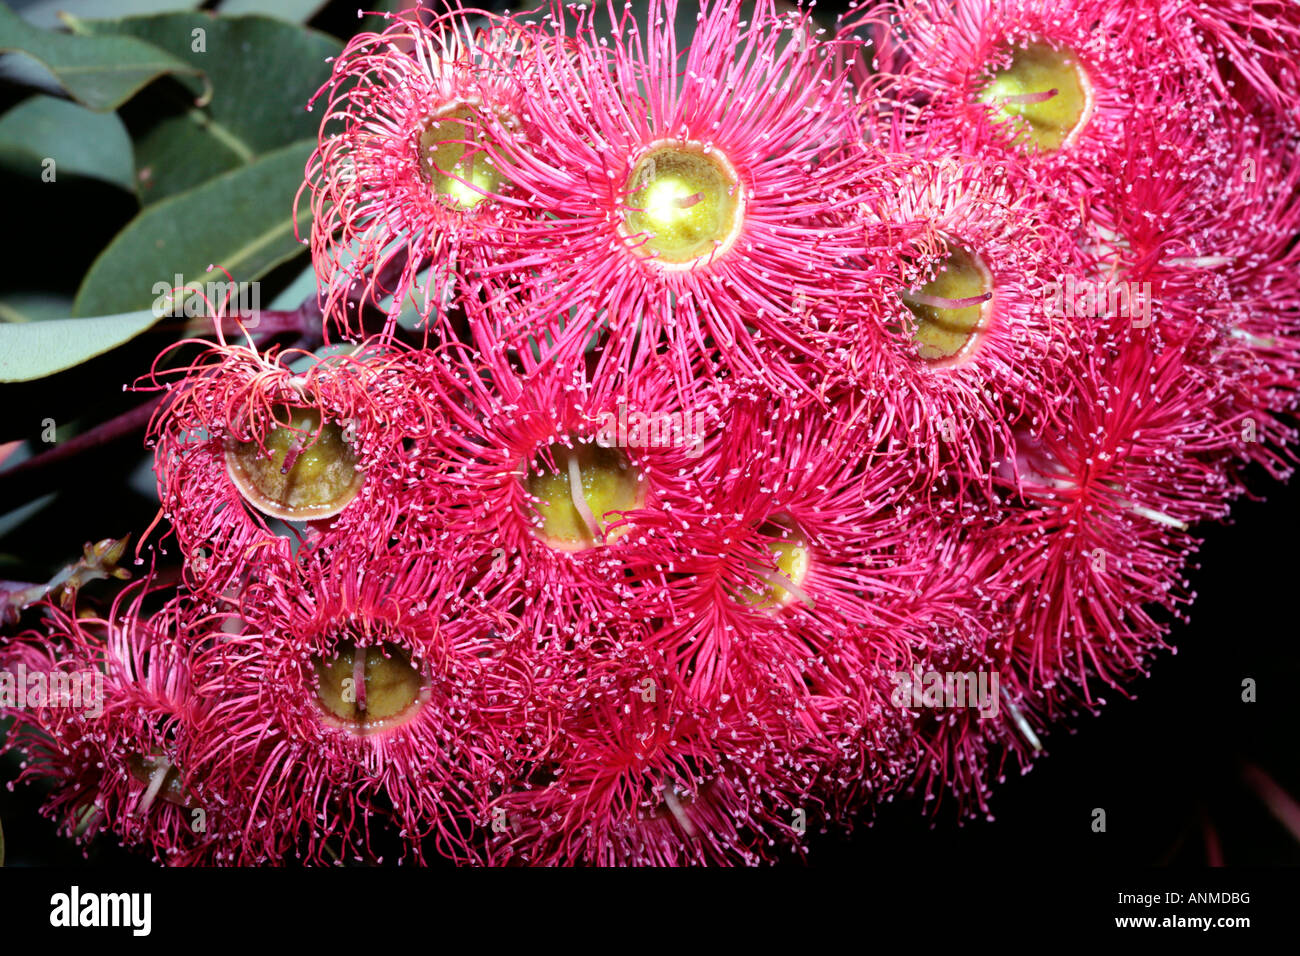 Western Australian rot blühenden Gummi Blumen und Obst - Eucalyptus ficifolia-Familie Fabaceae Stockfoto